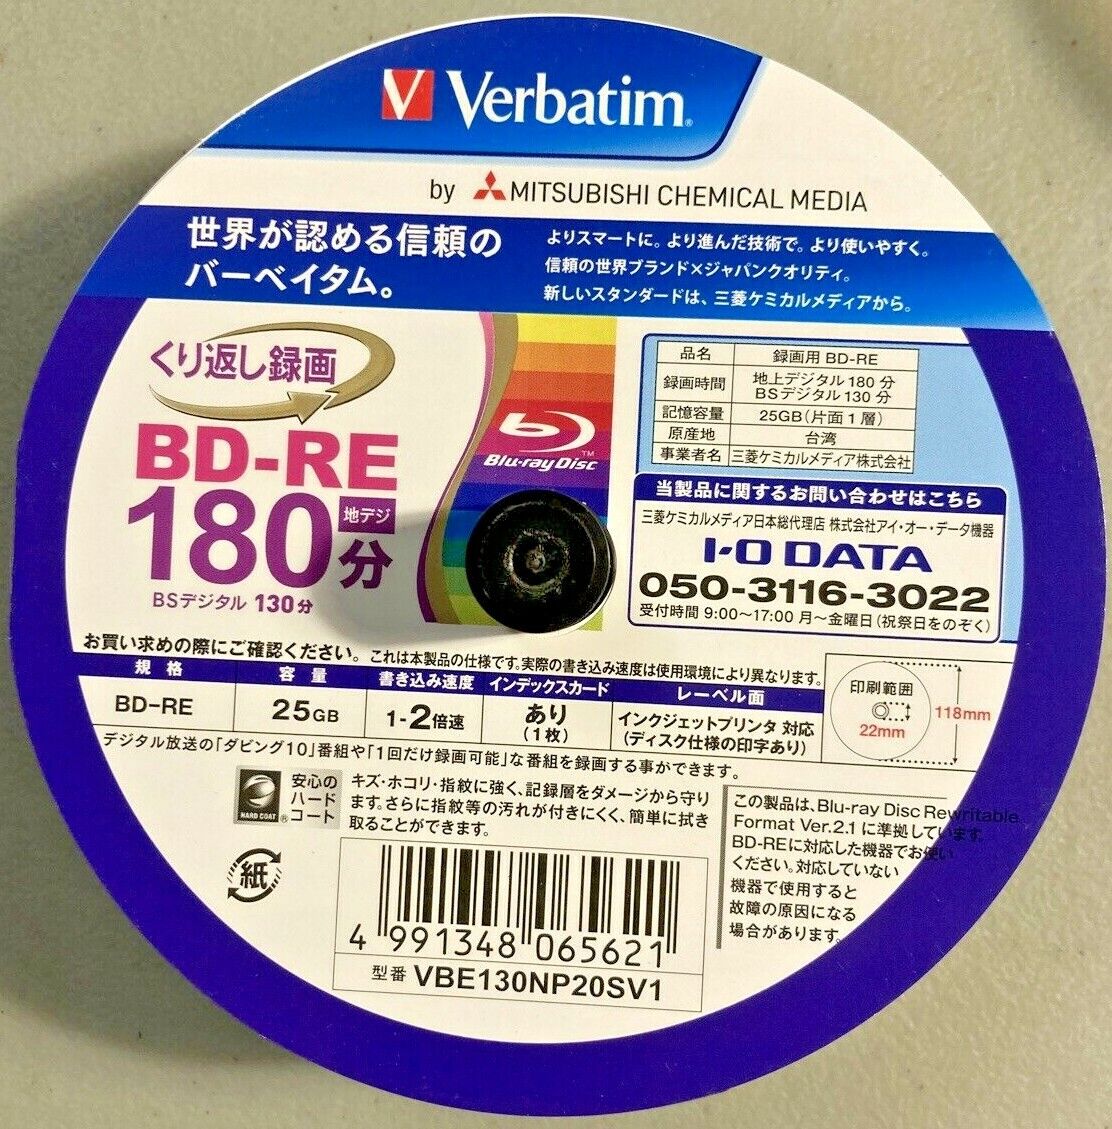 19 Verbatim 3D BluRay DVD Discs 25GB, BD-RE Rewritable 2x Speed Blu-Ray Discs 